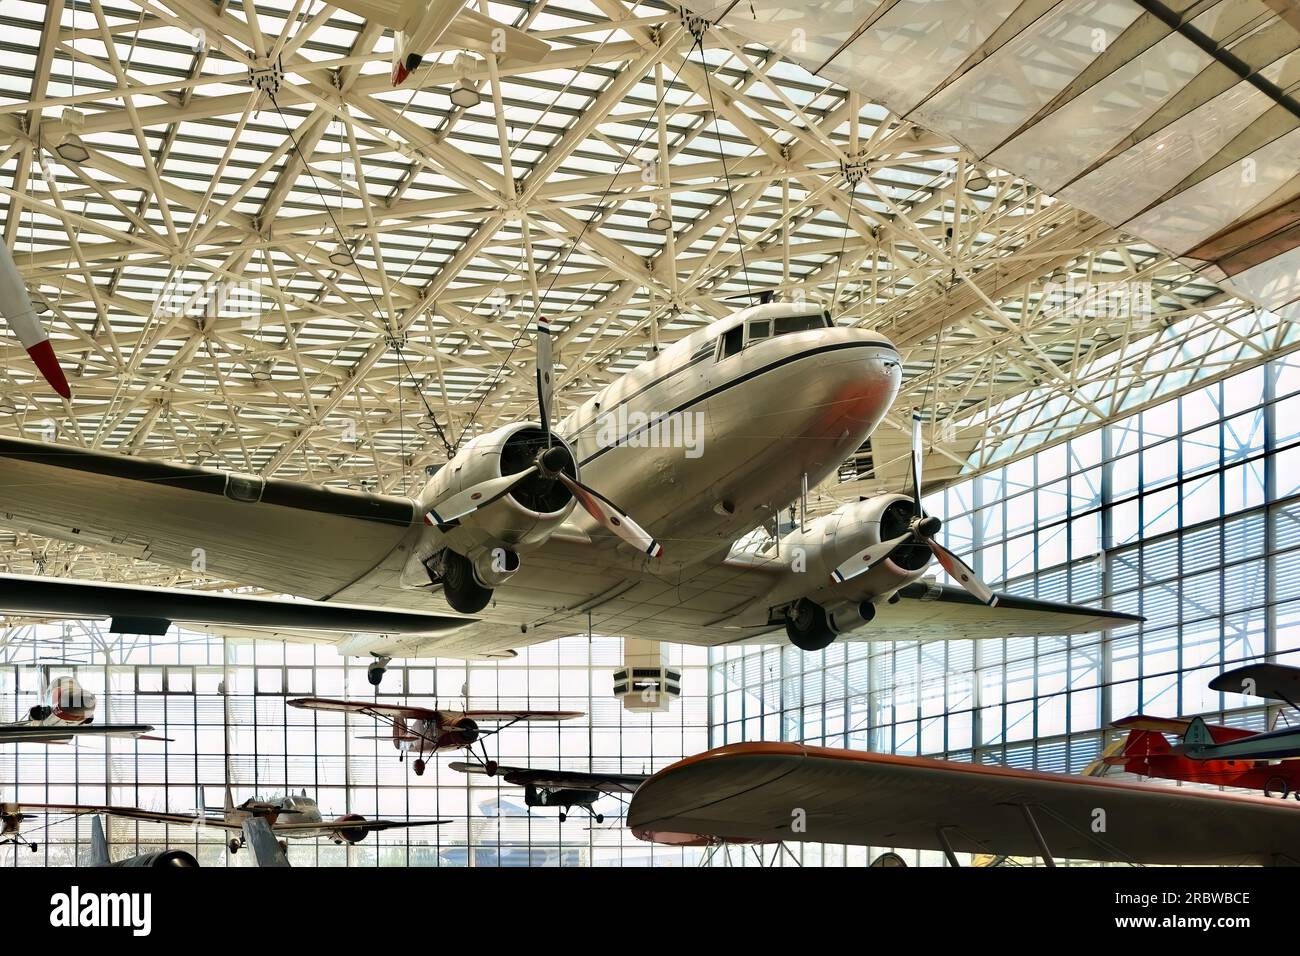 Douglas DC-3 The Museum of Flight Seattle Washington State USA Stock Photo